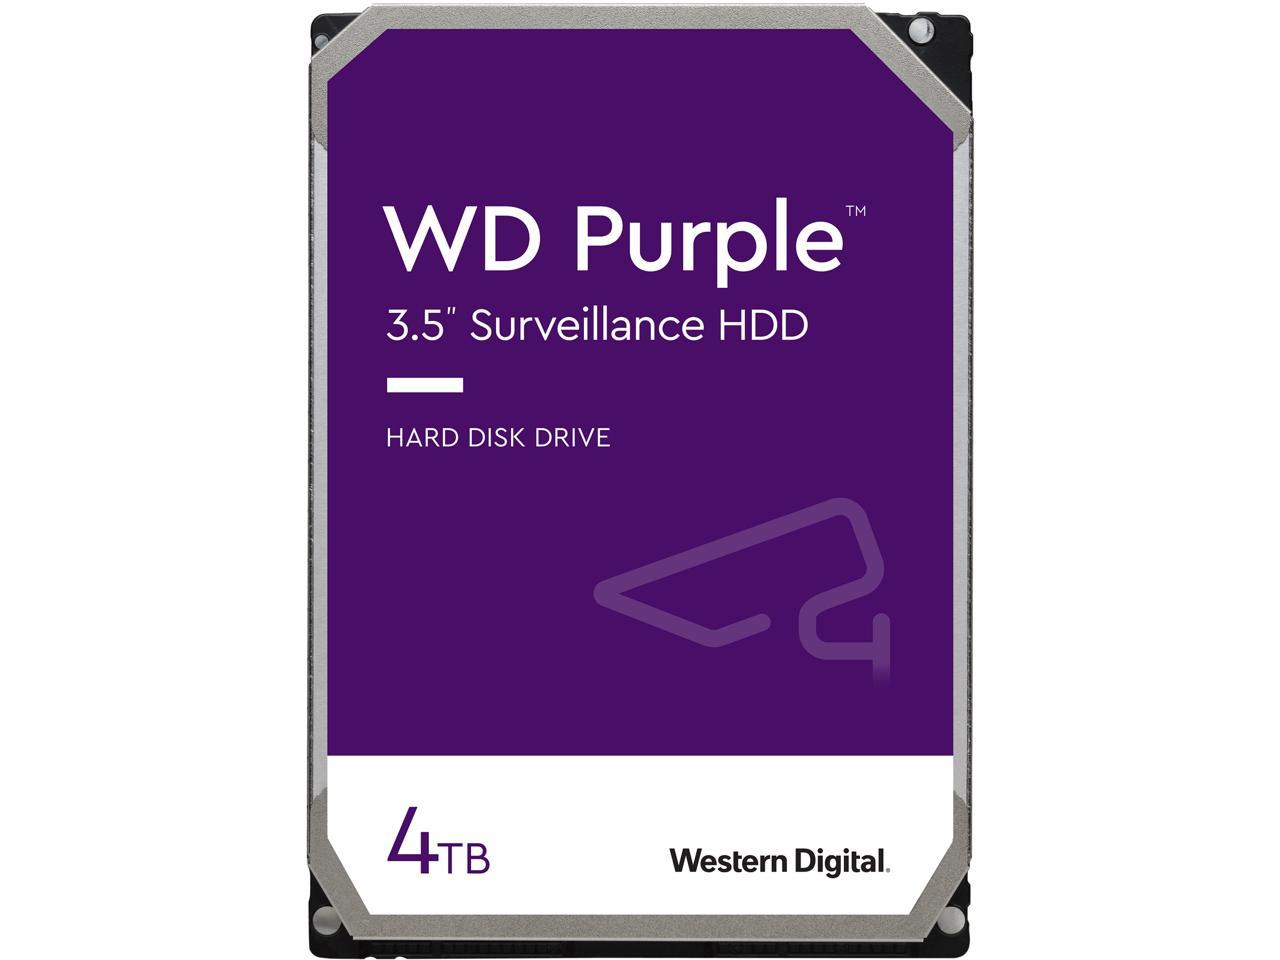 4TB WD Purple Surveillance Hard Disk Drive $86